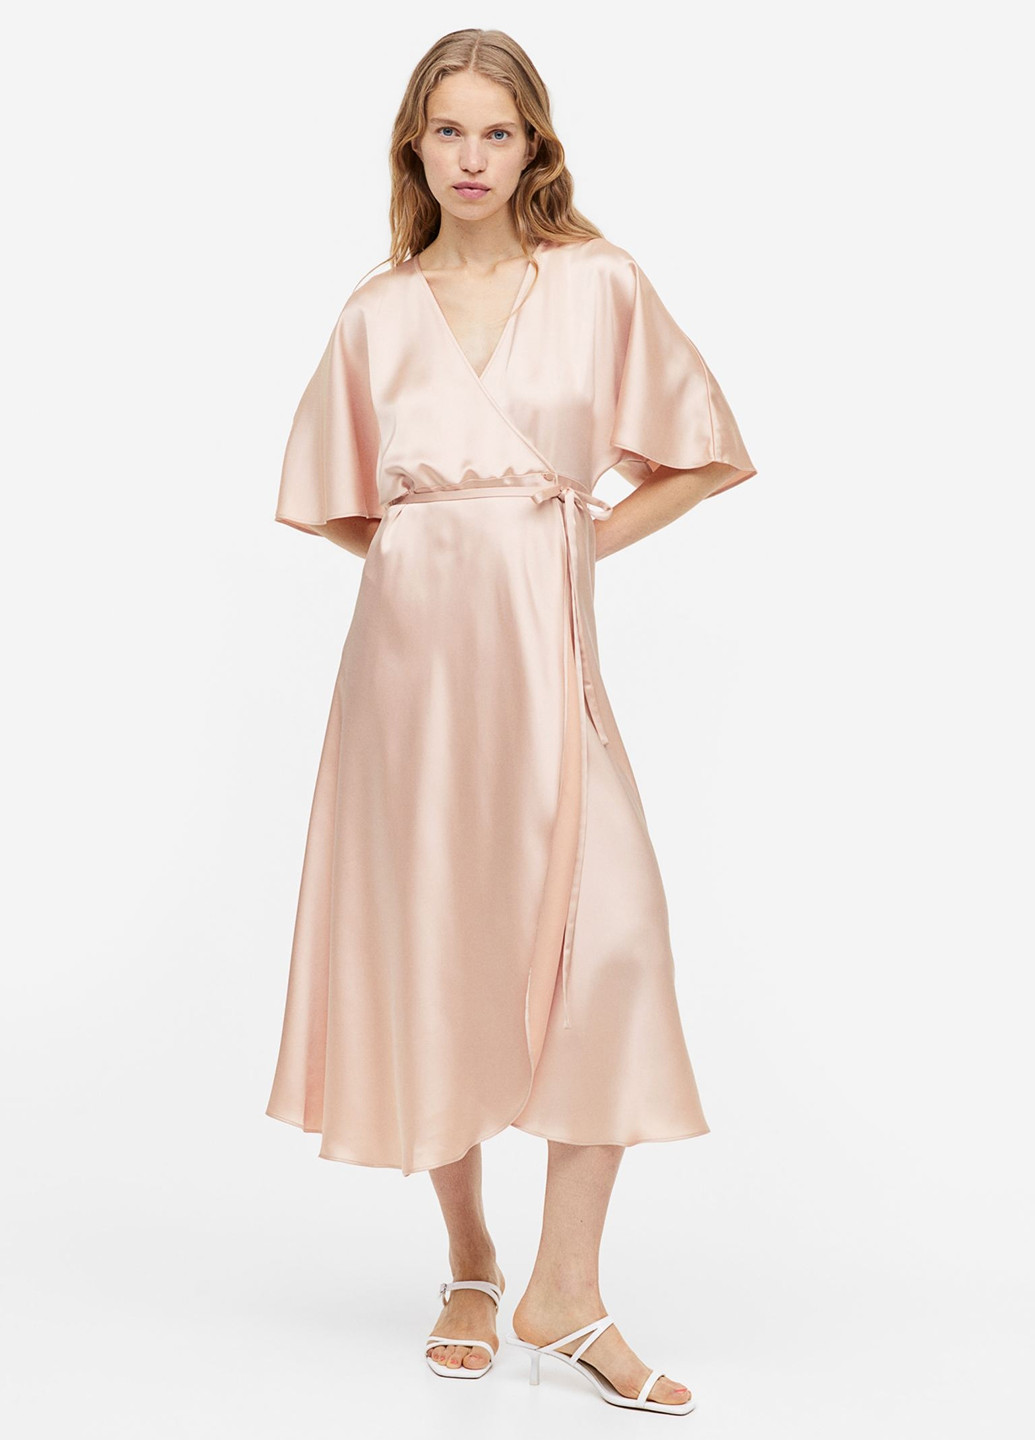 Розовое кэжуал платье на запах H&M однотонное